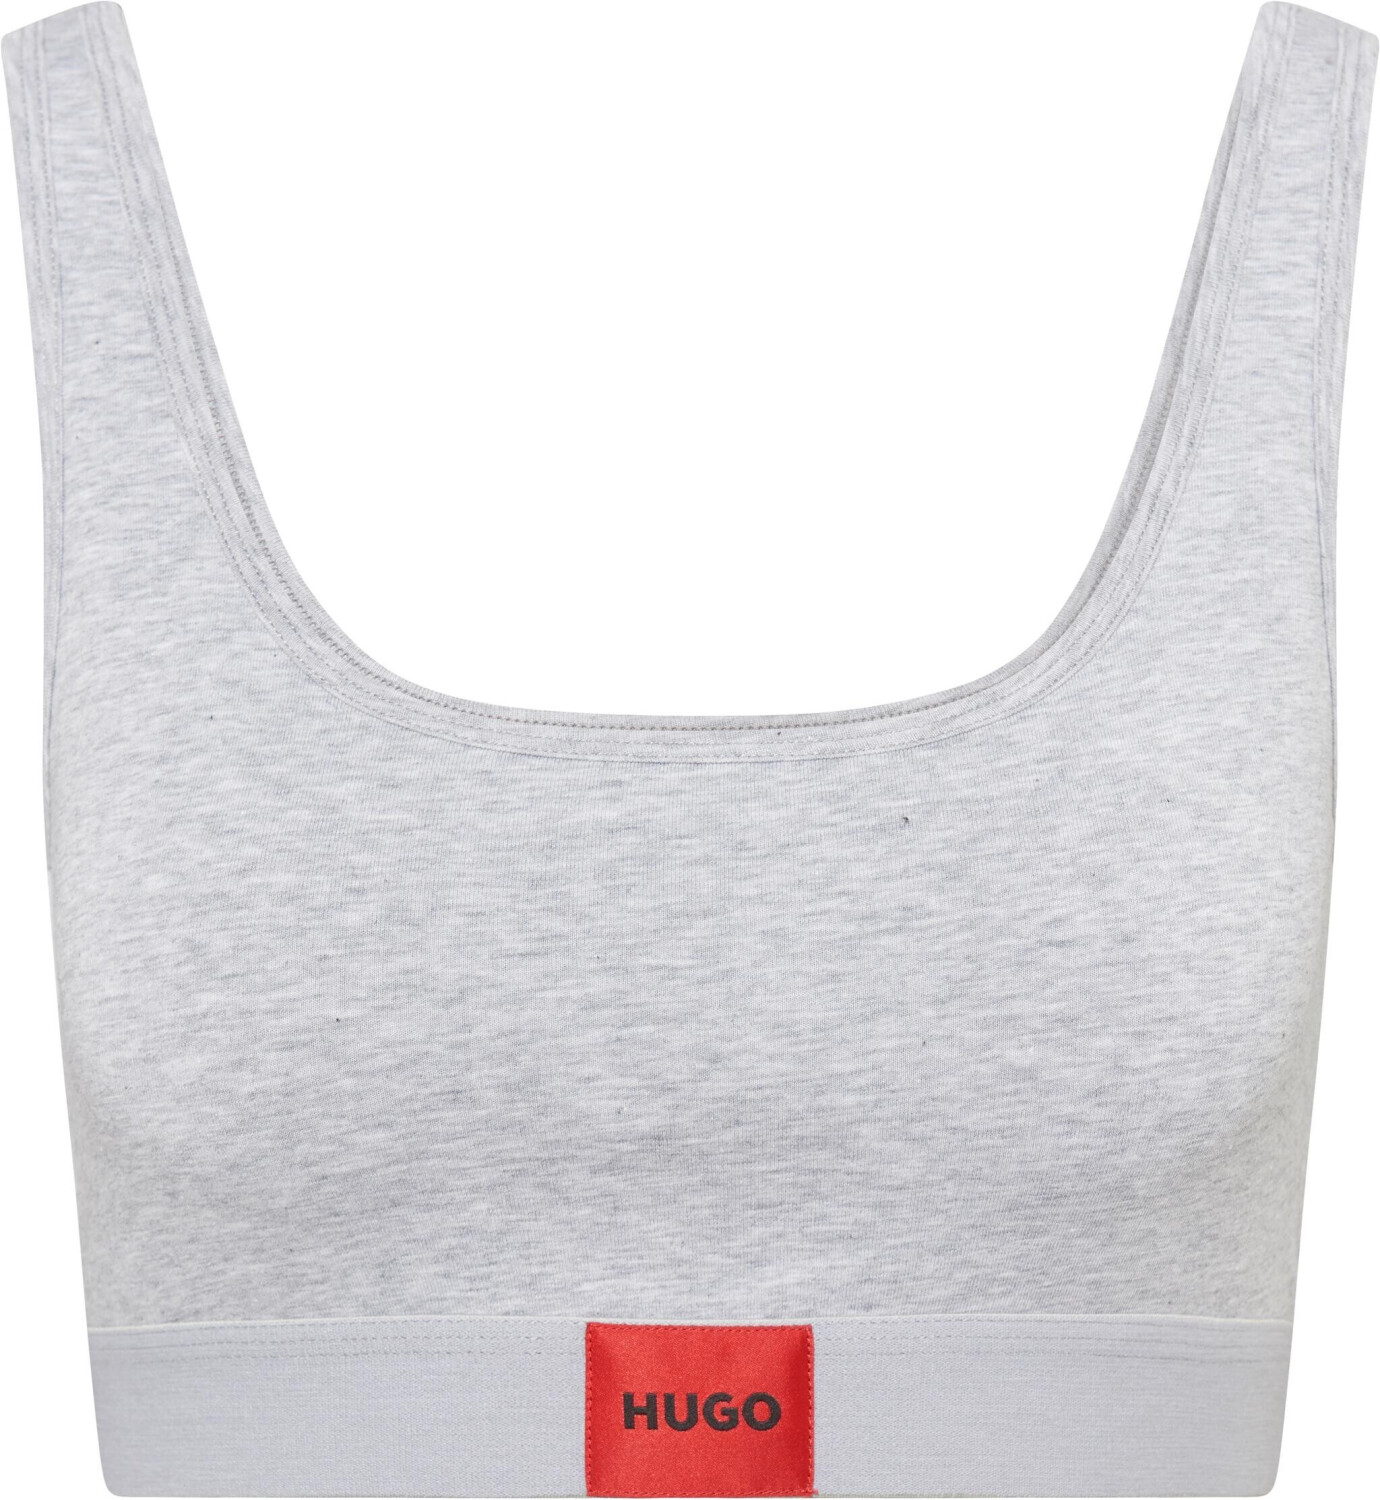 Hugo Boss Bralette Red Label (50469652) ab 22,06 € | Preisvergleich bei